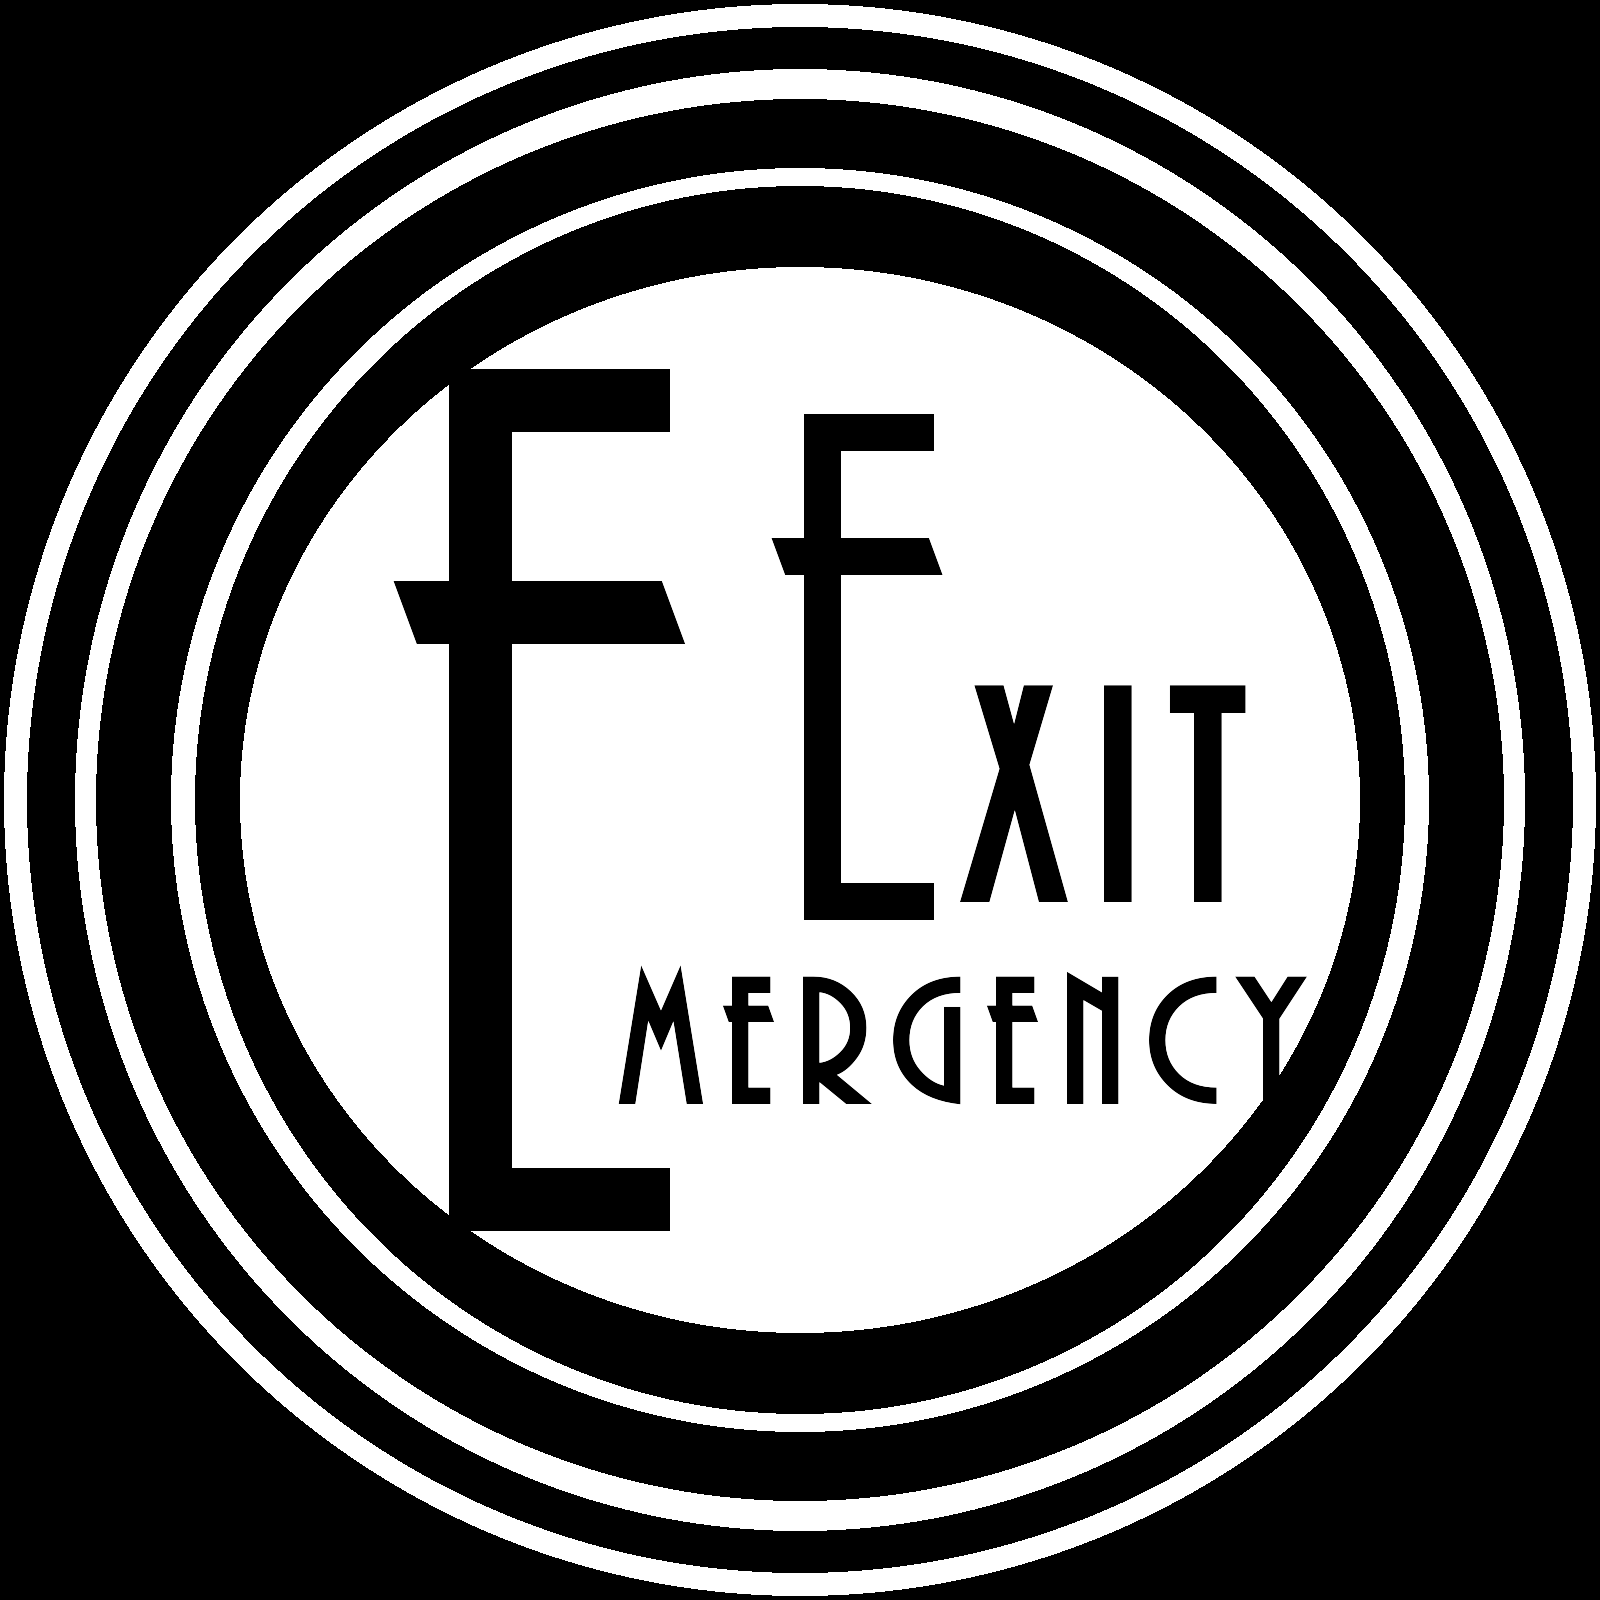 Emergency Exit 83 Political Correctness 